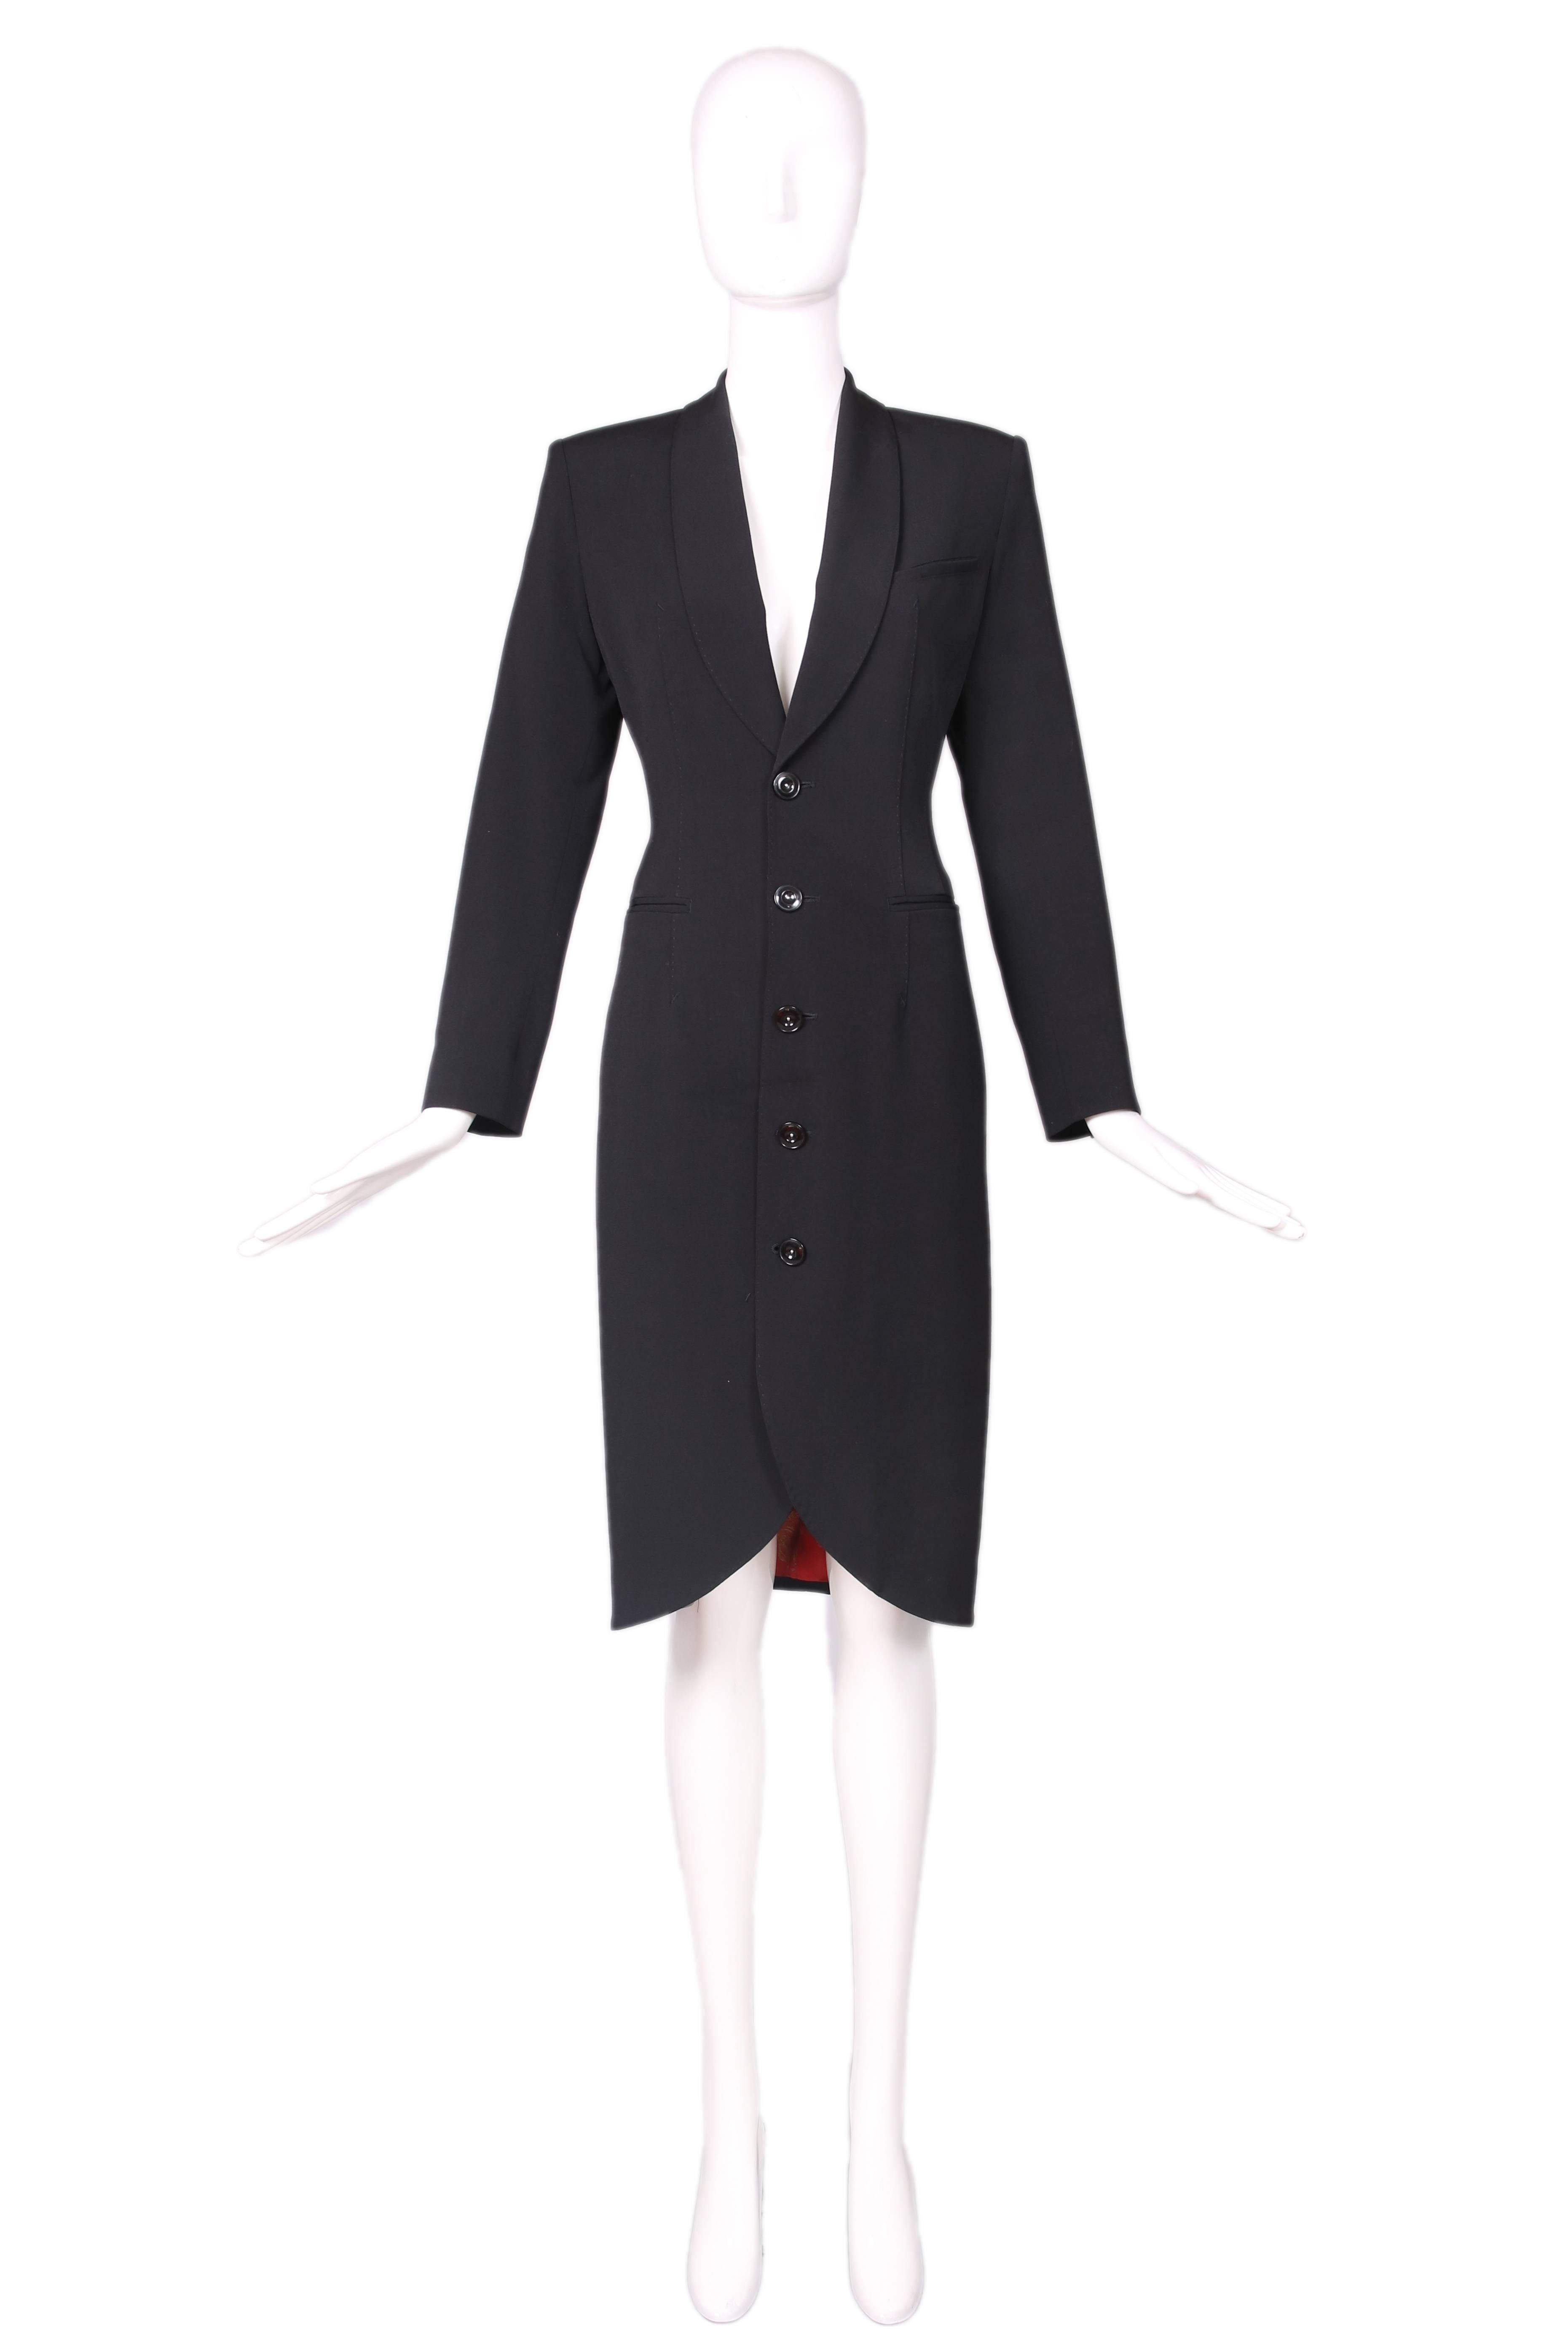 Vintage Jean Paul Gaultier black wool tuxedo dress/coat. In excellent condition. Size US 6.
MEASUREMENTS:
Bust - 32